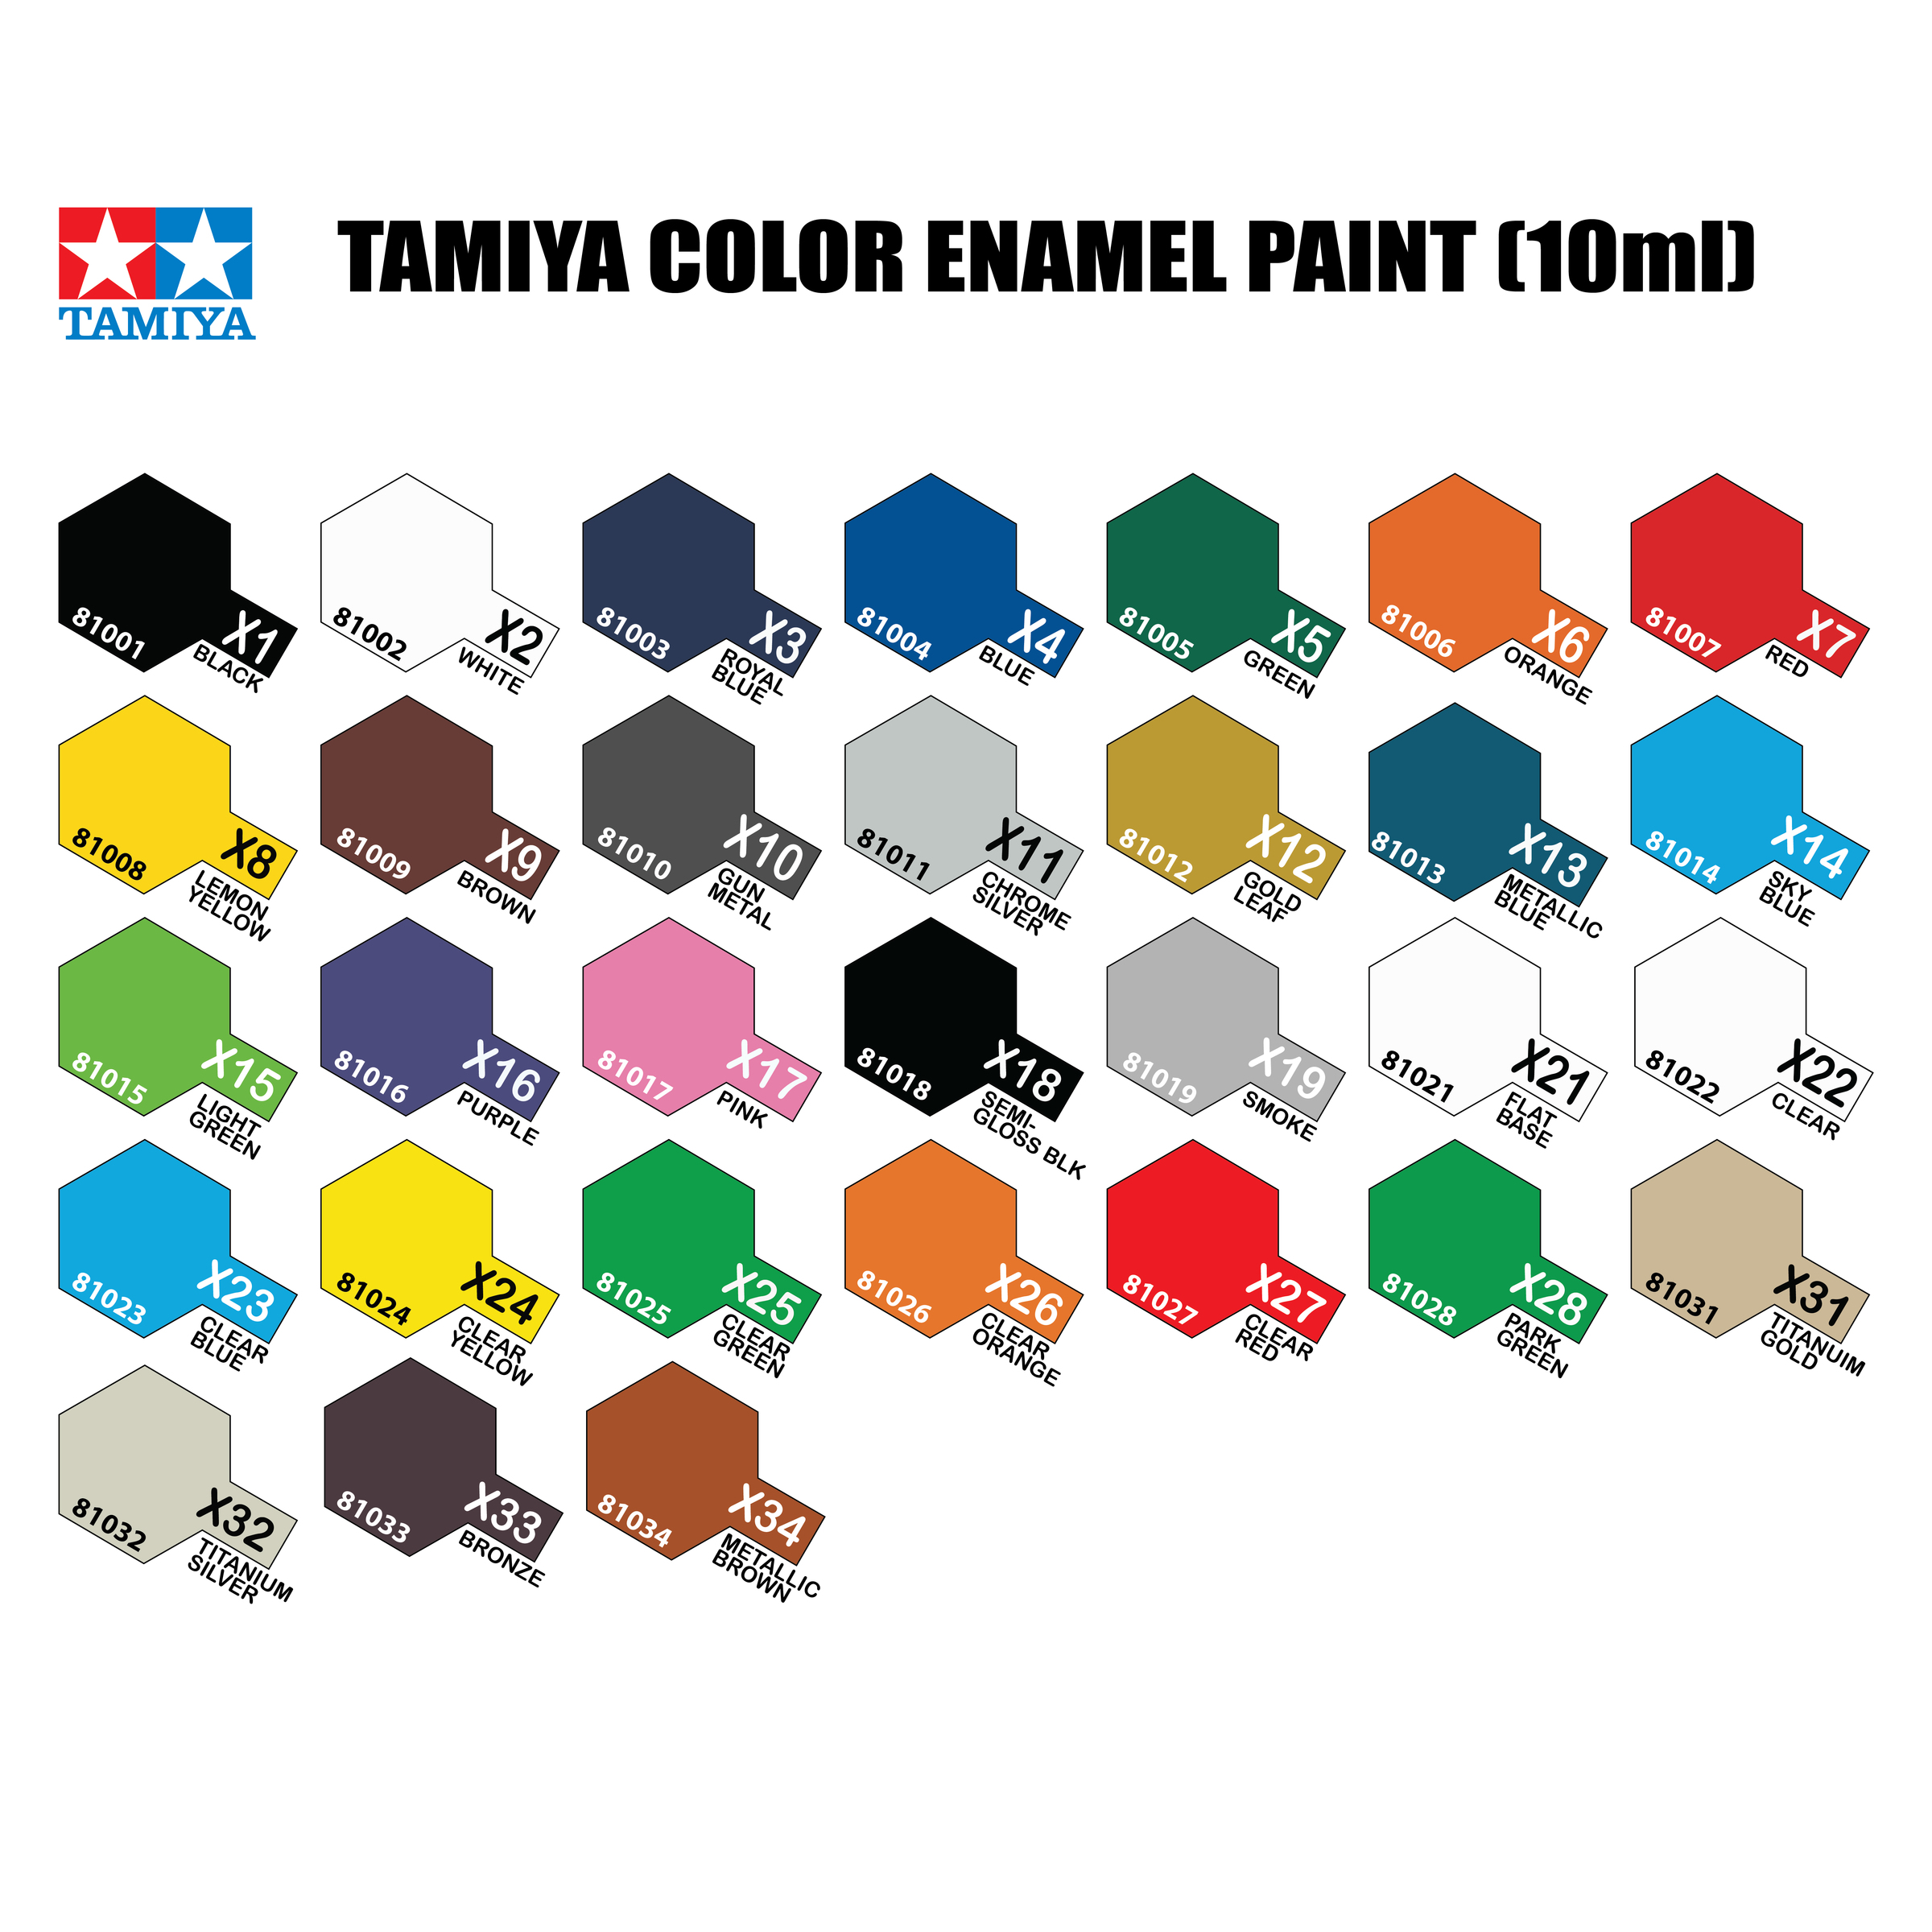 Tamiya Model Paint Chart